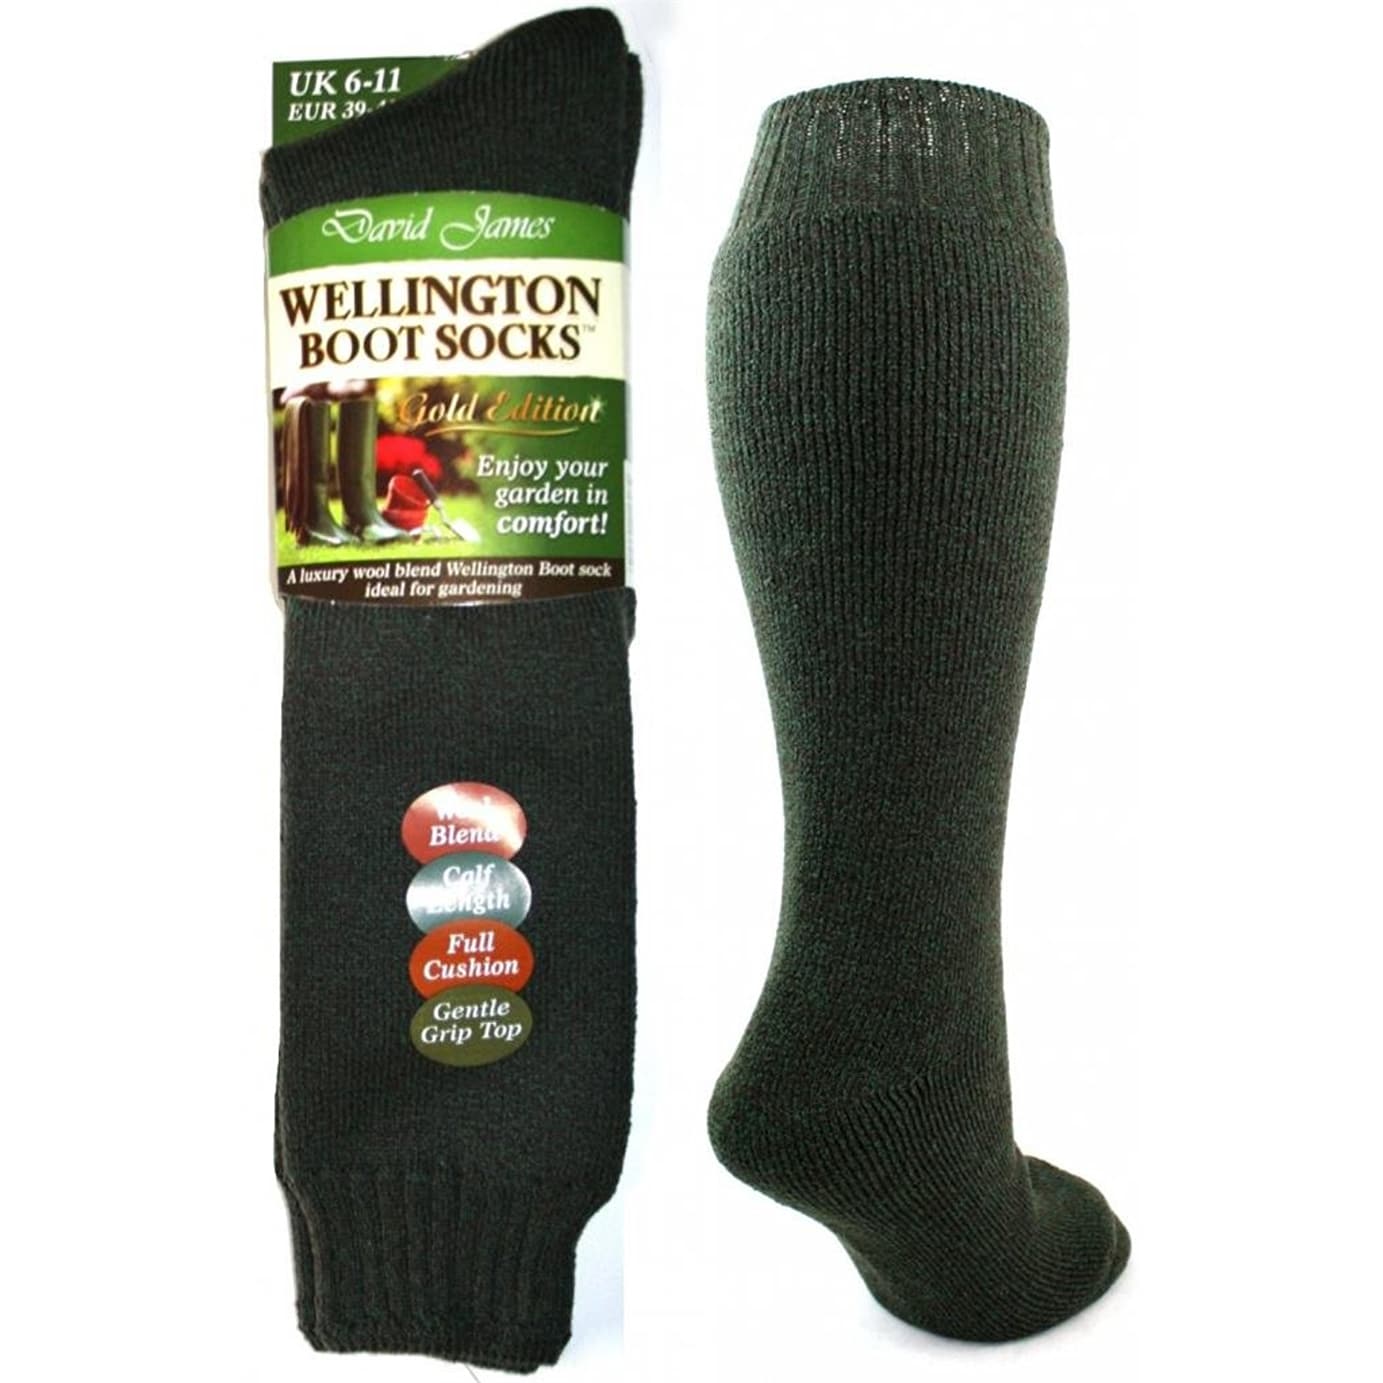 David James Wellington Boot Socks Long 